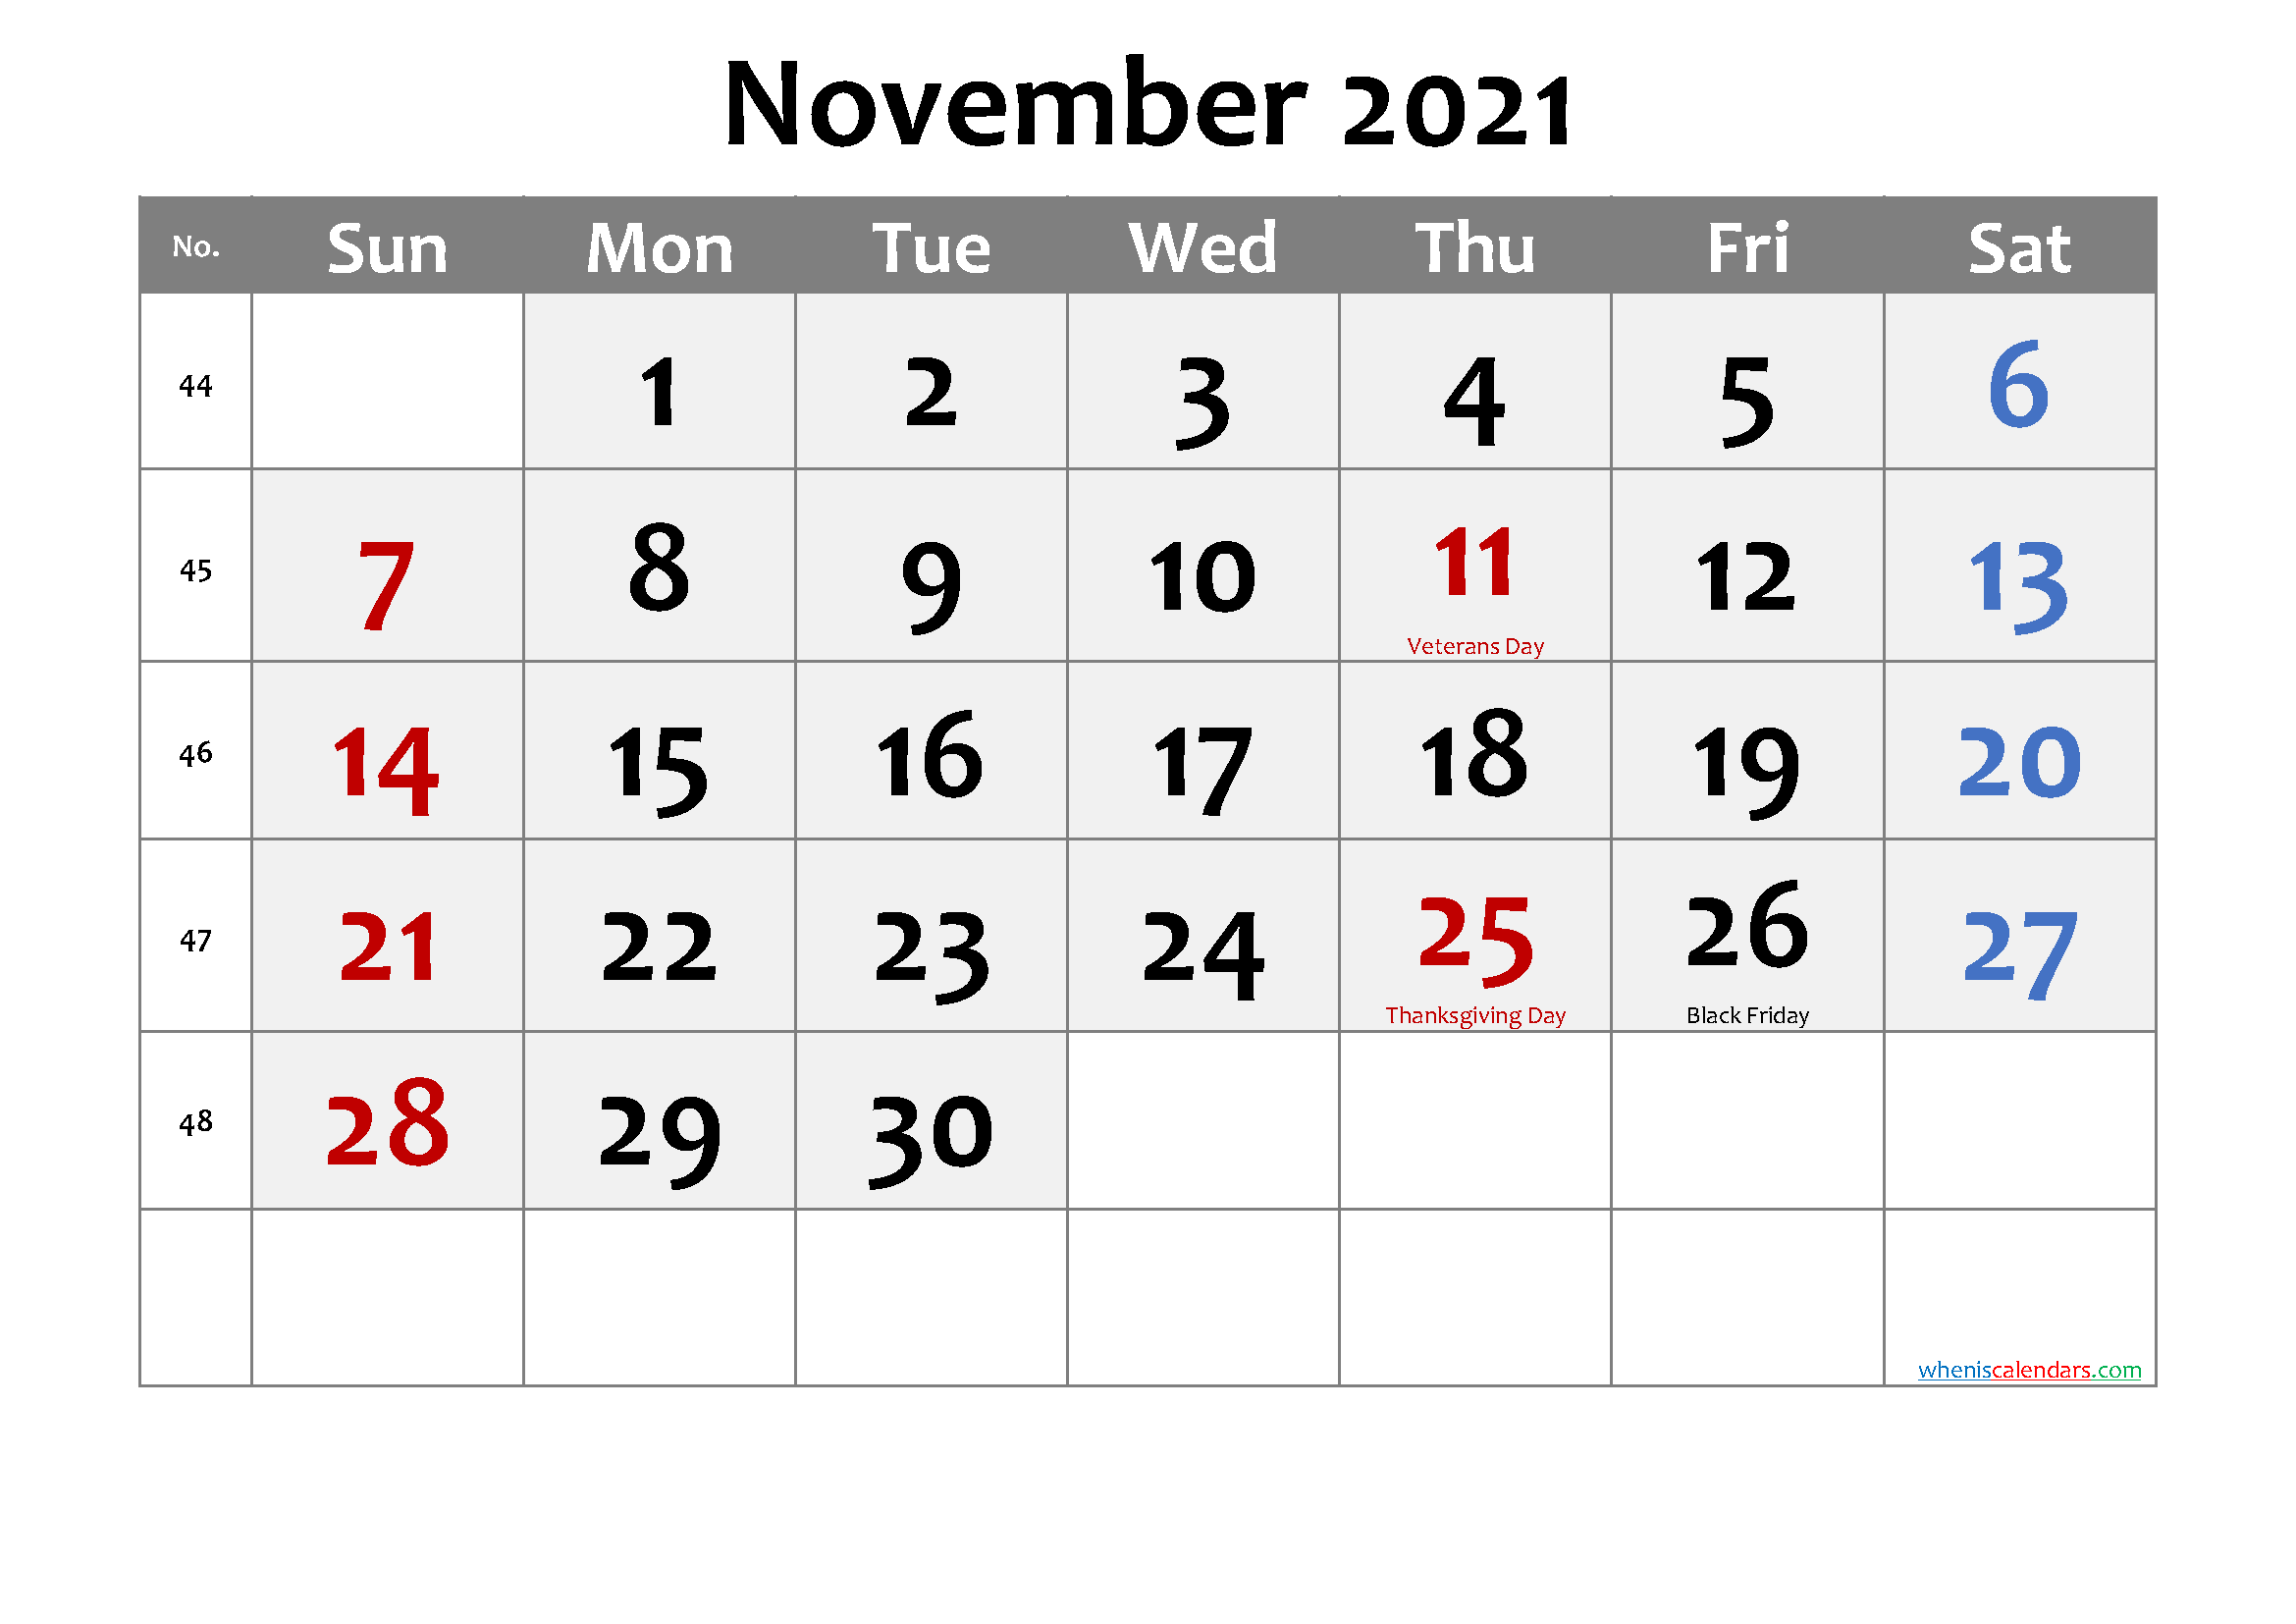 november-2024-calendar-with-holidays-printable-calendar